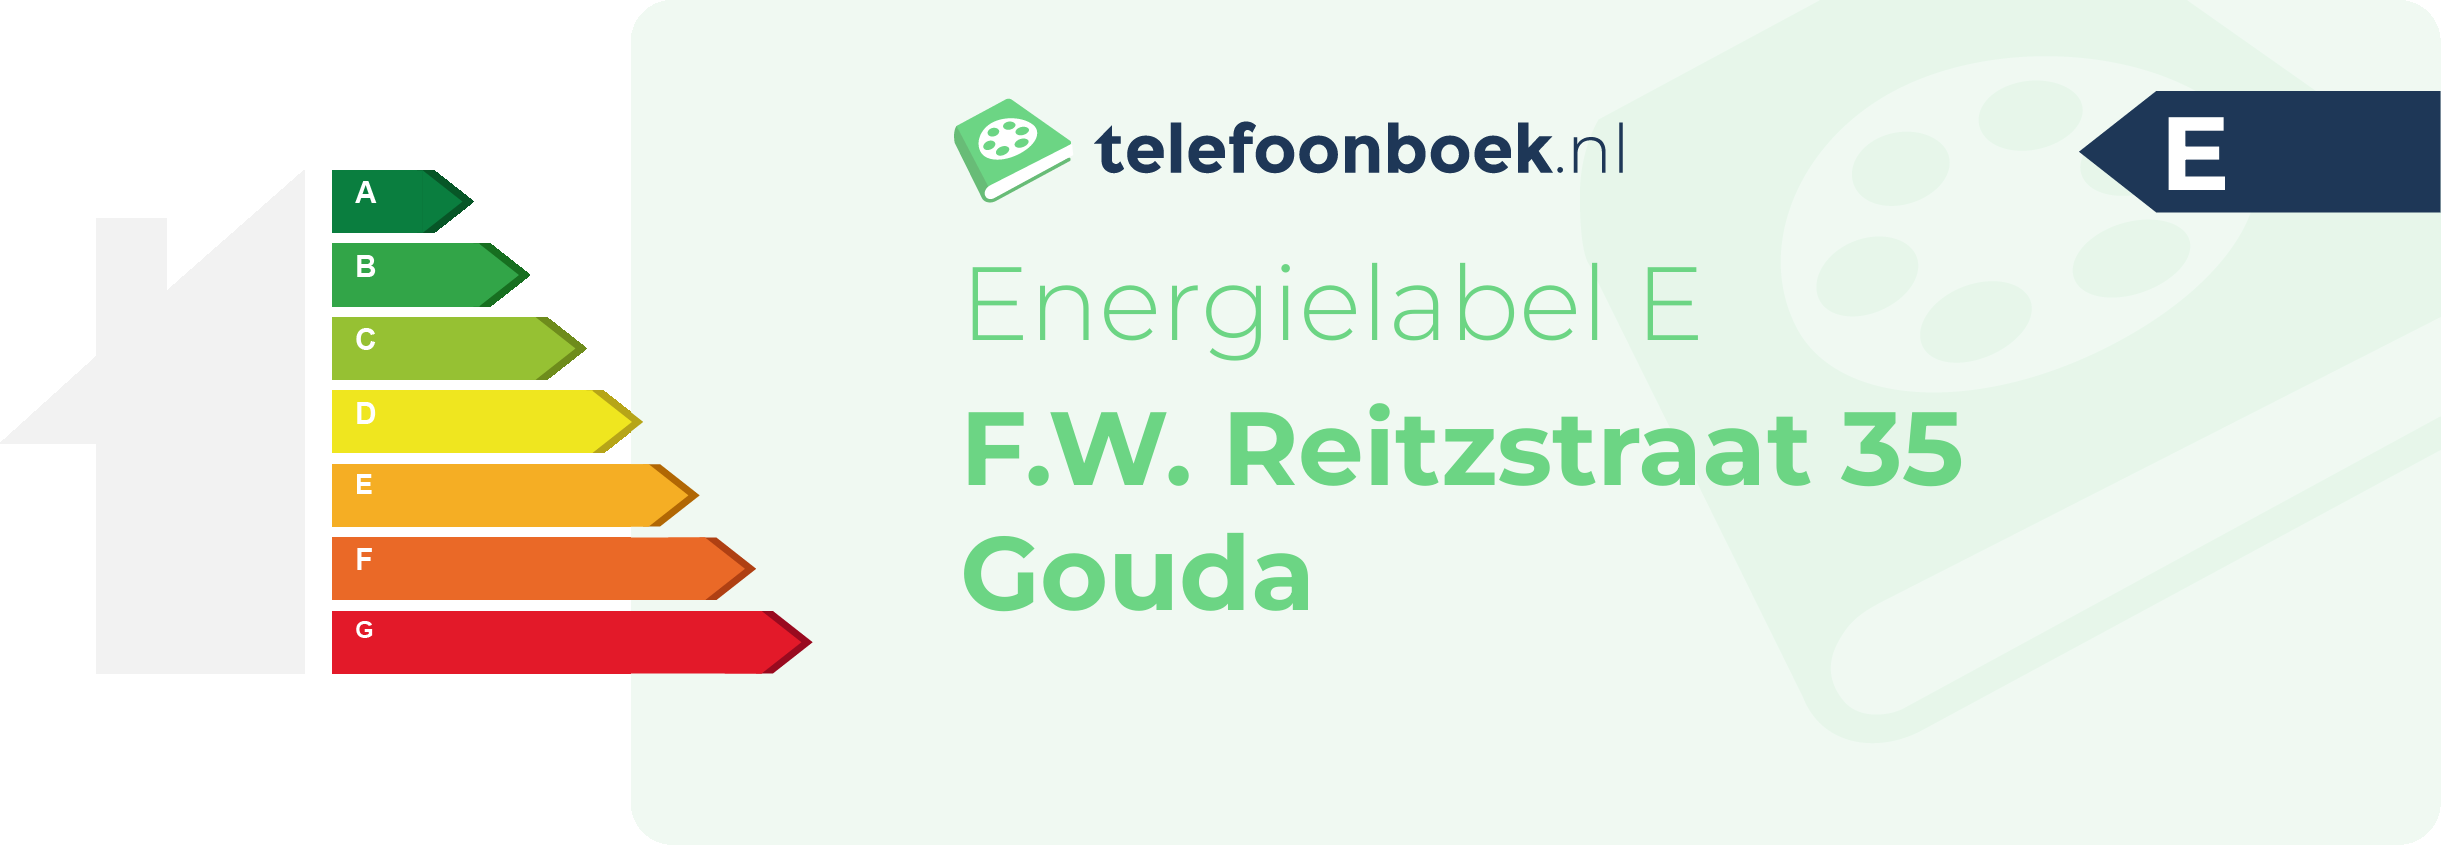 Energielabel F.W. Reitzstraat 35 Gouda